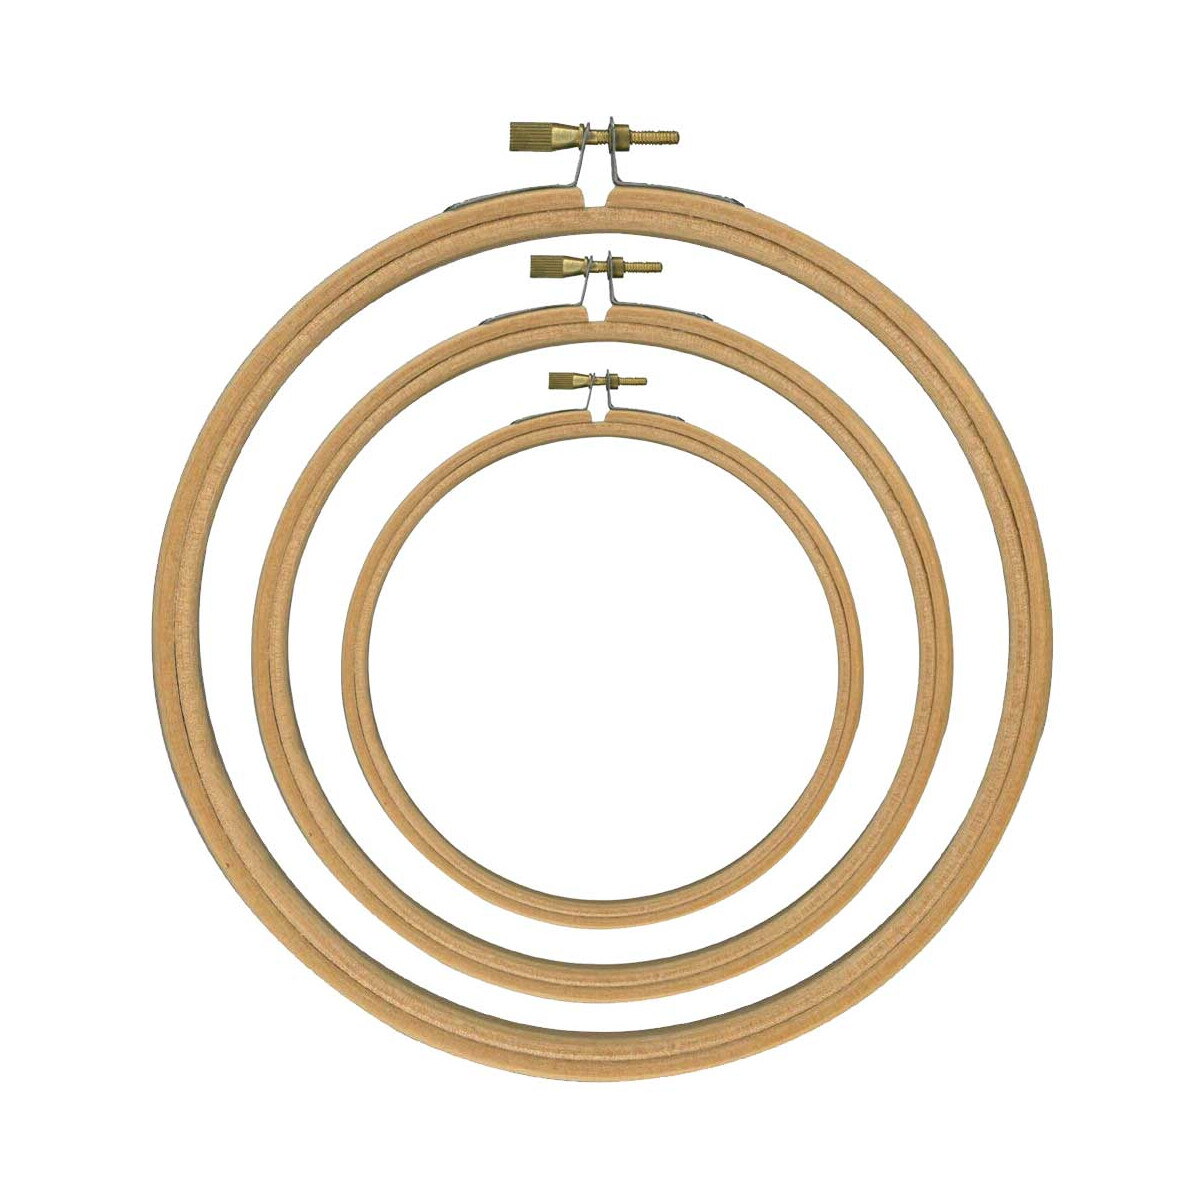 Wooden embroidery hoop SET, 14.5-20-24 cm round (3 pcs), DIY